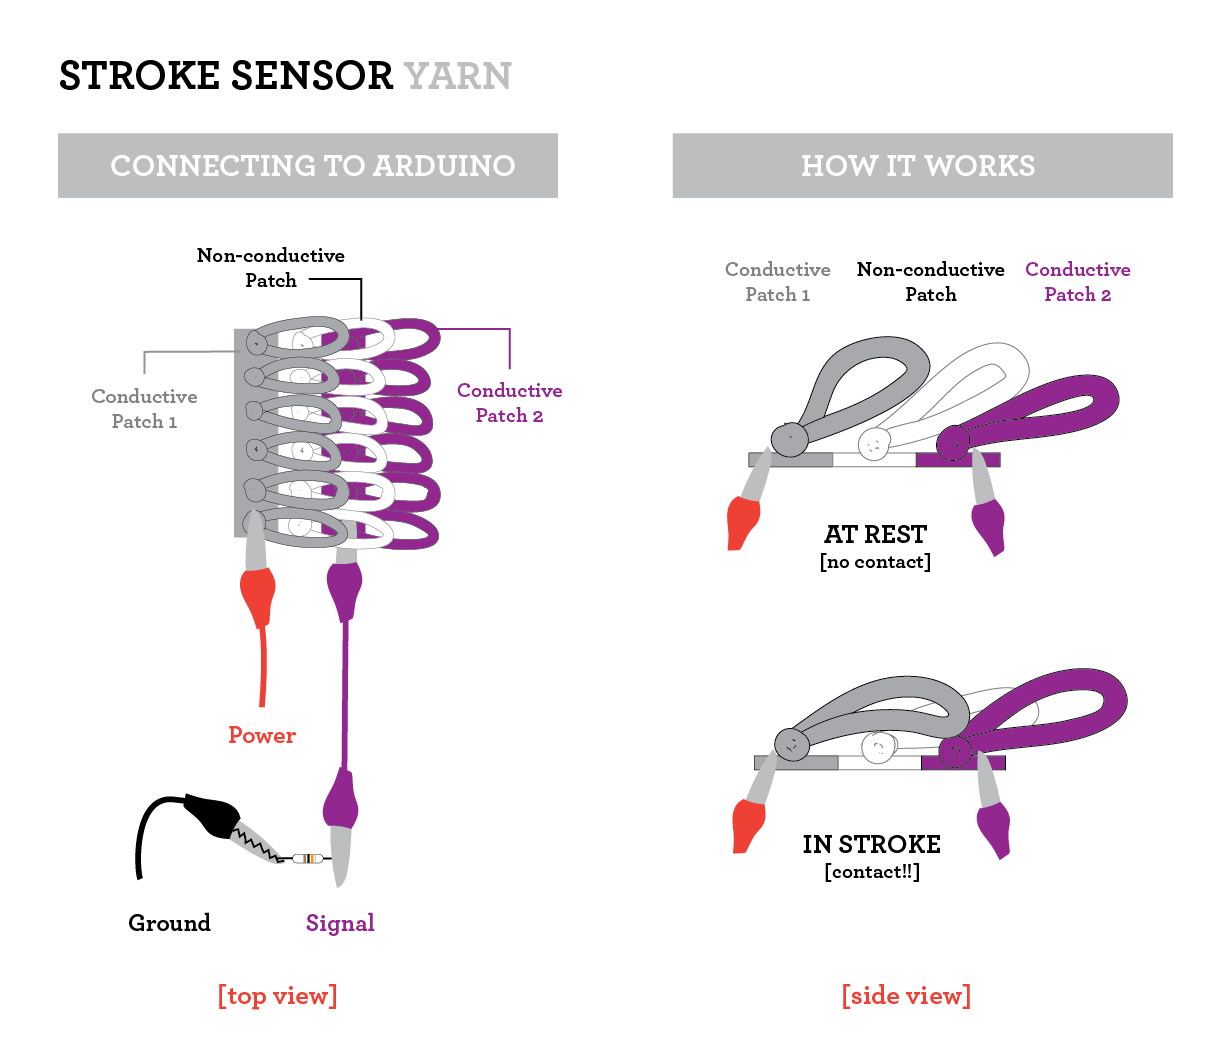 stroke_sensor_yarn-03.png